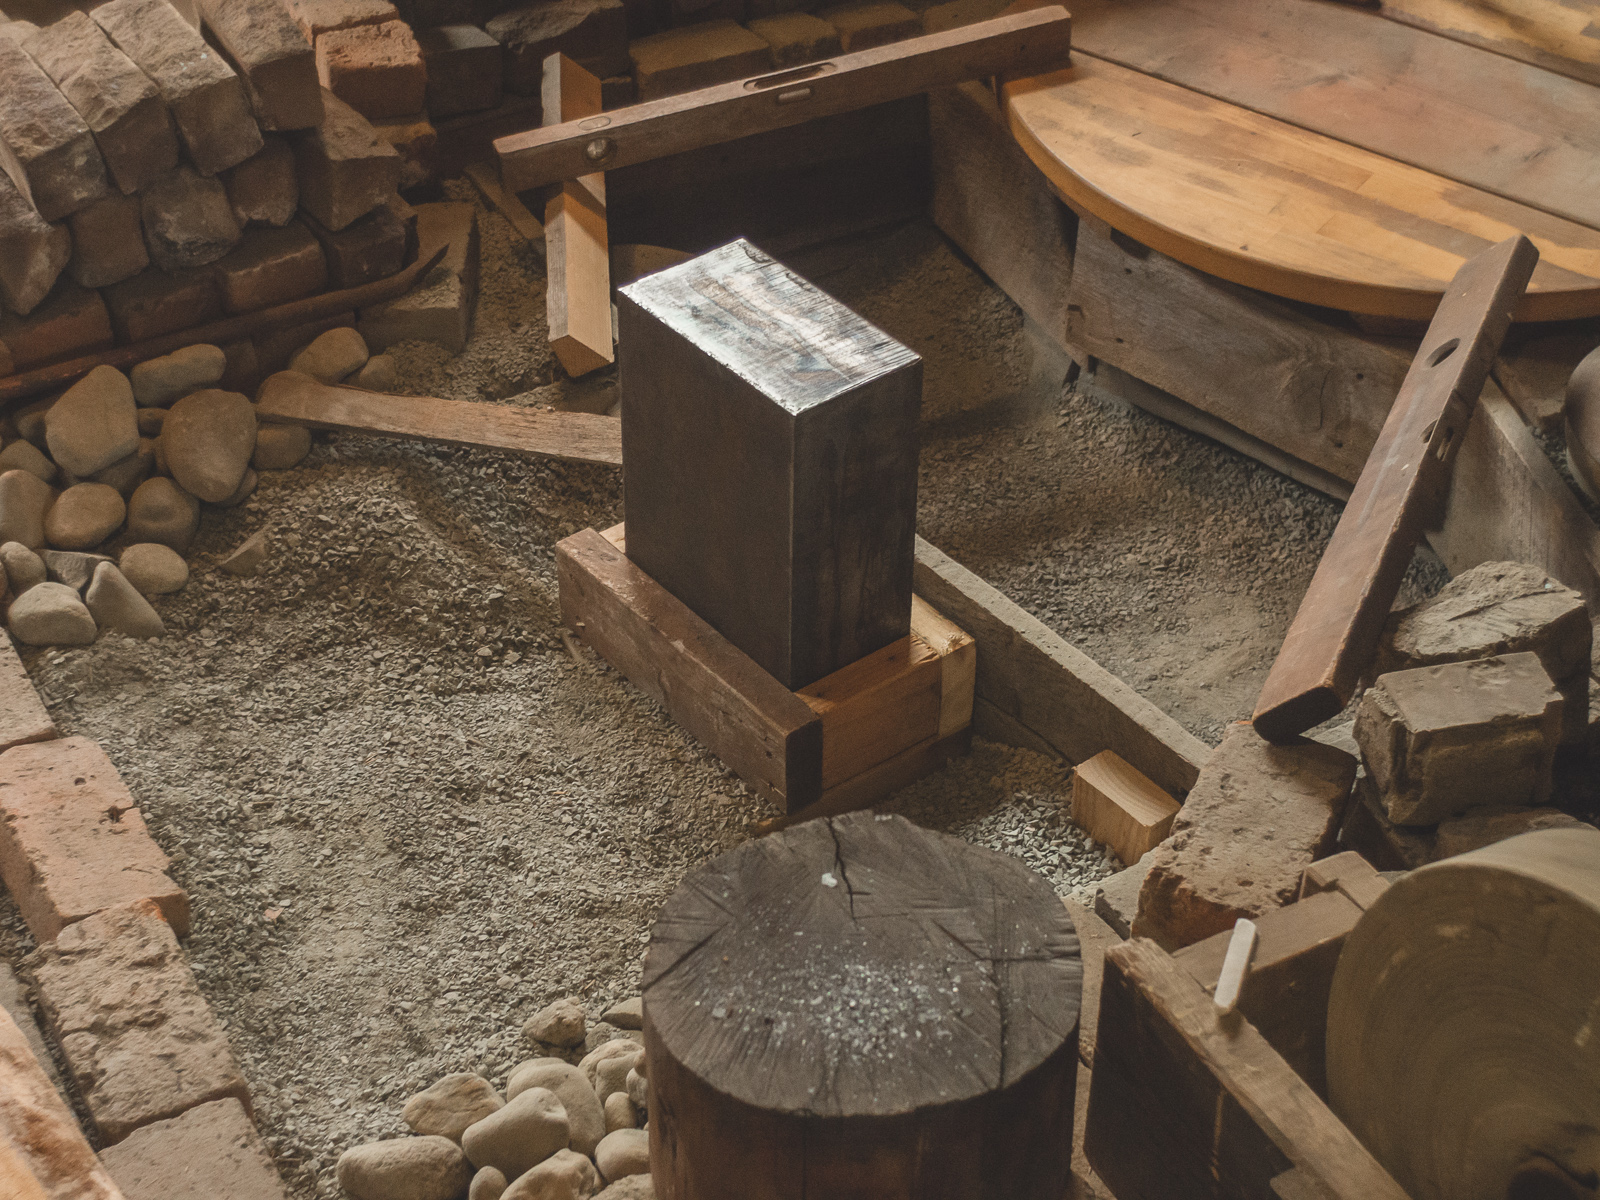 Island Blacksmith: Traditional Japanese style swordsmith anvil.